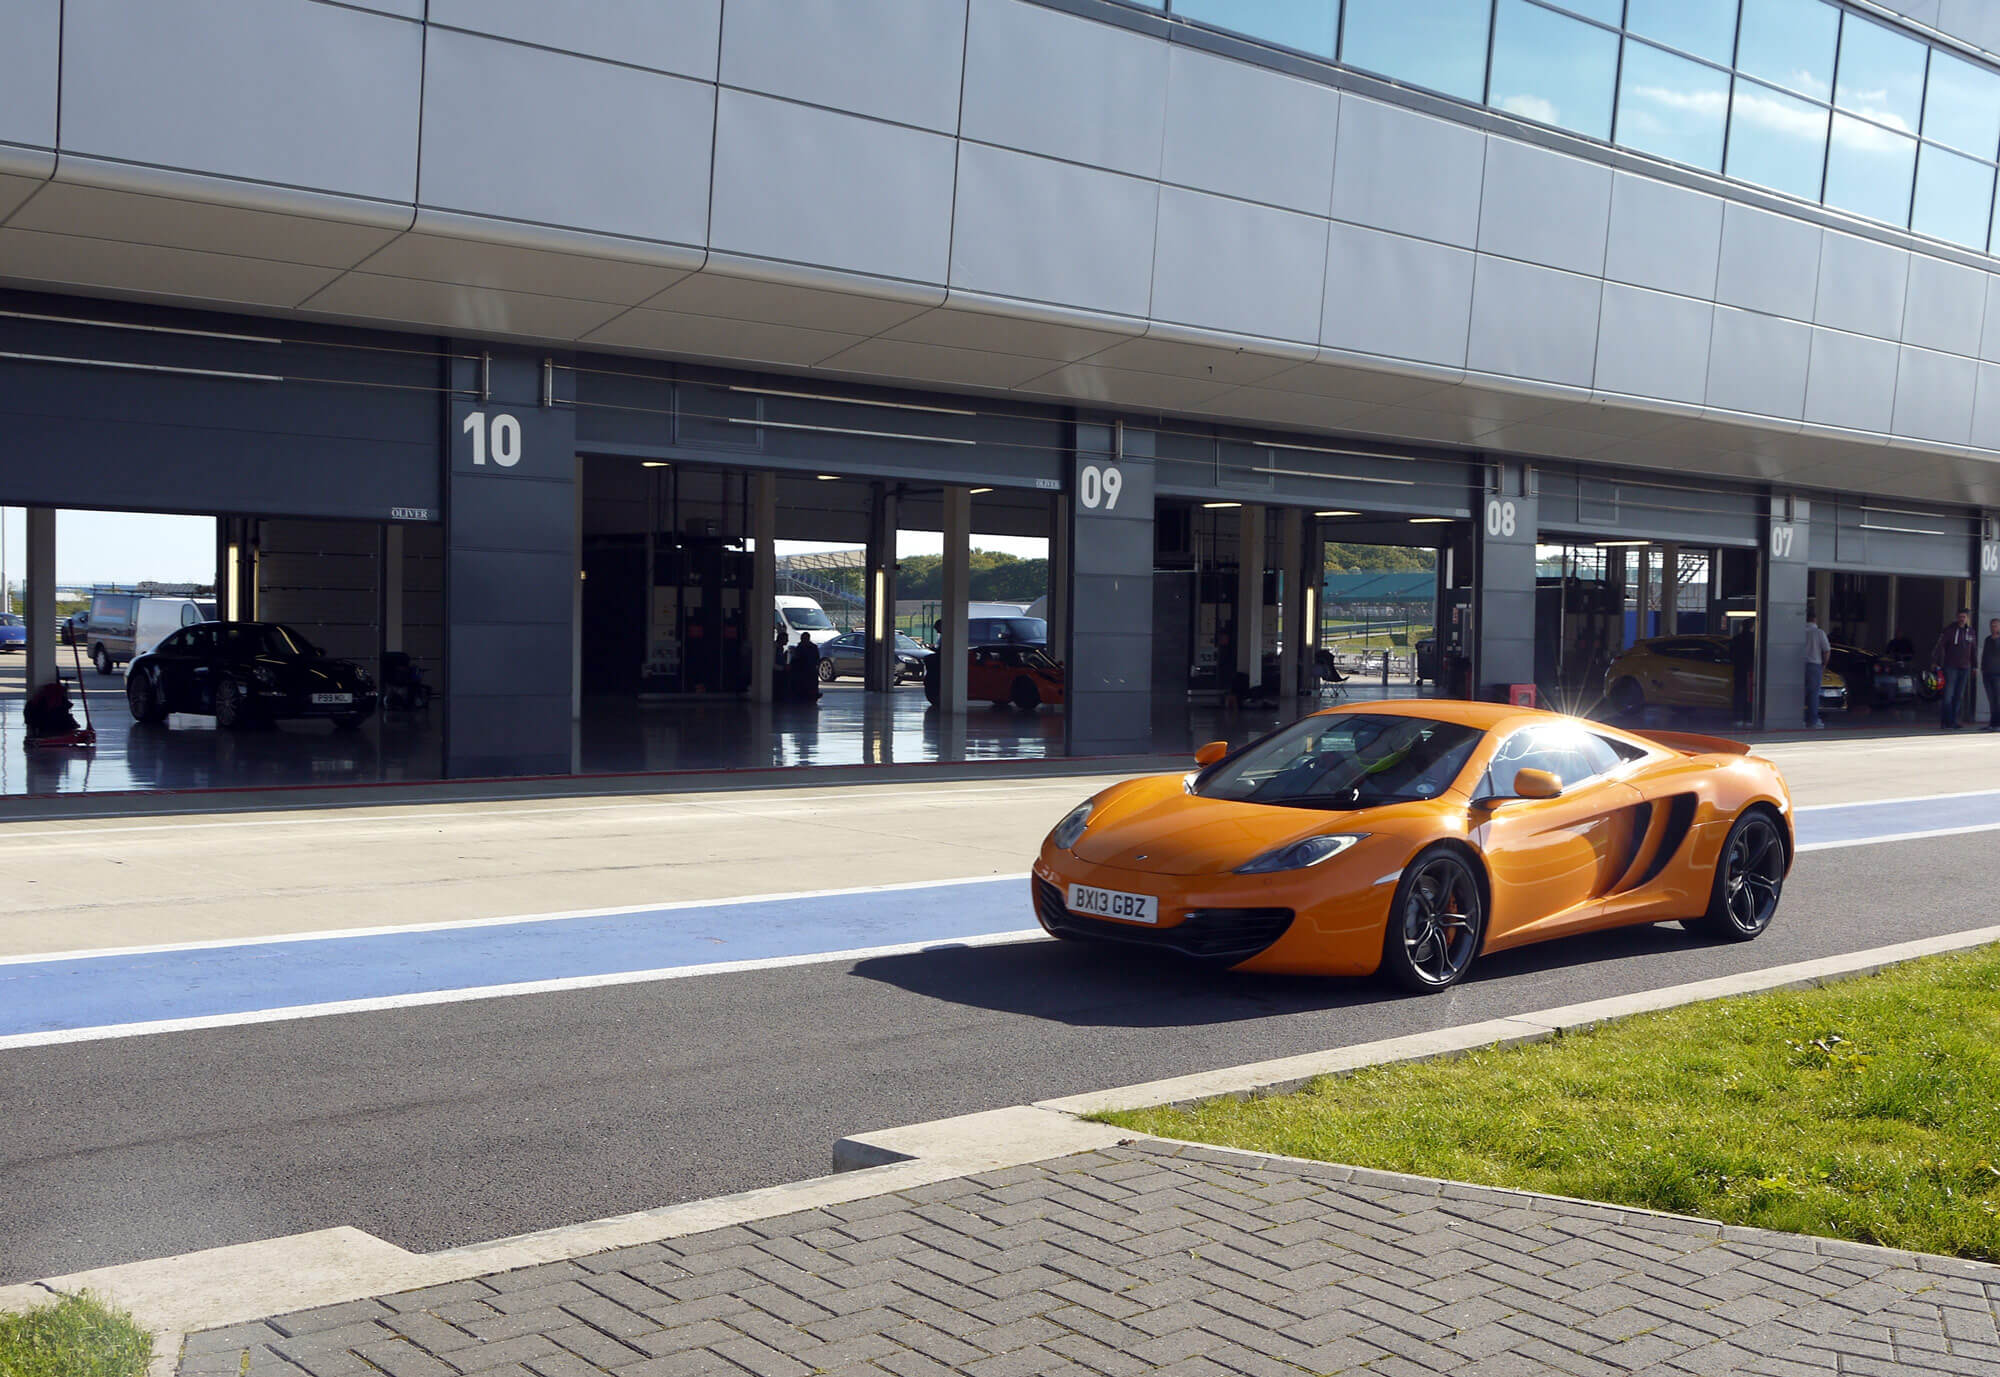 McLaren Silverstone International Car Track Day